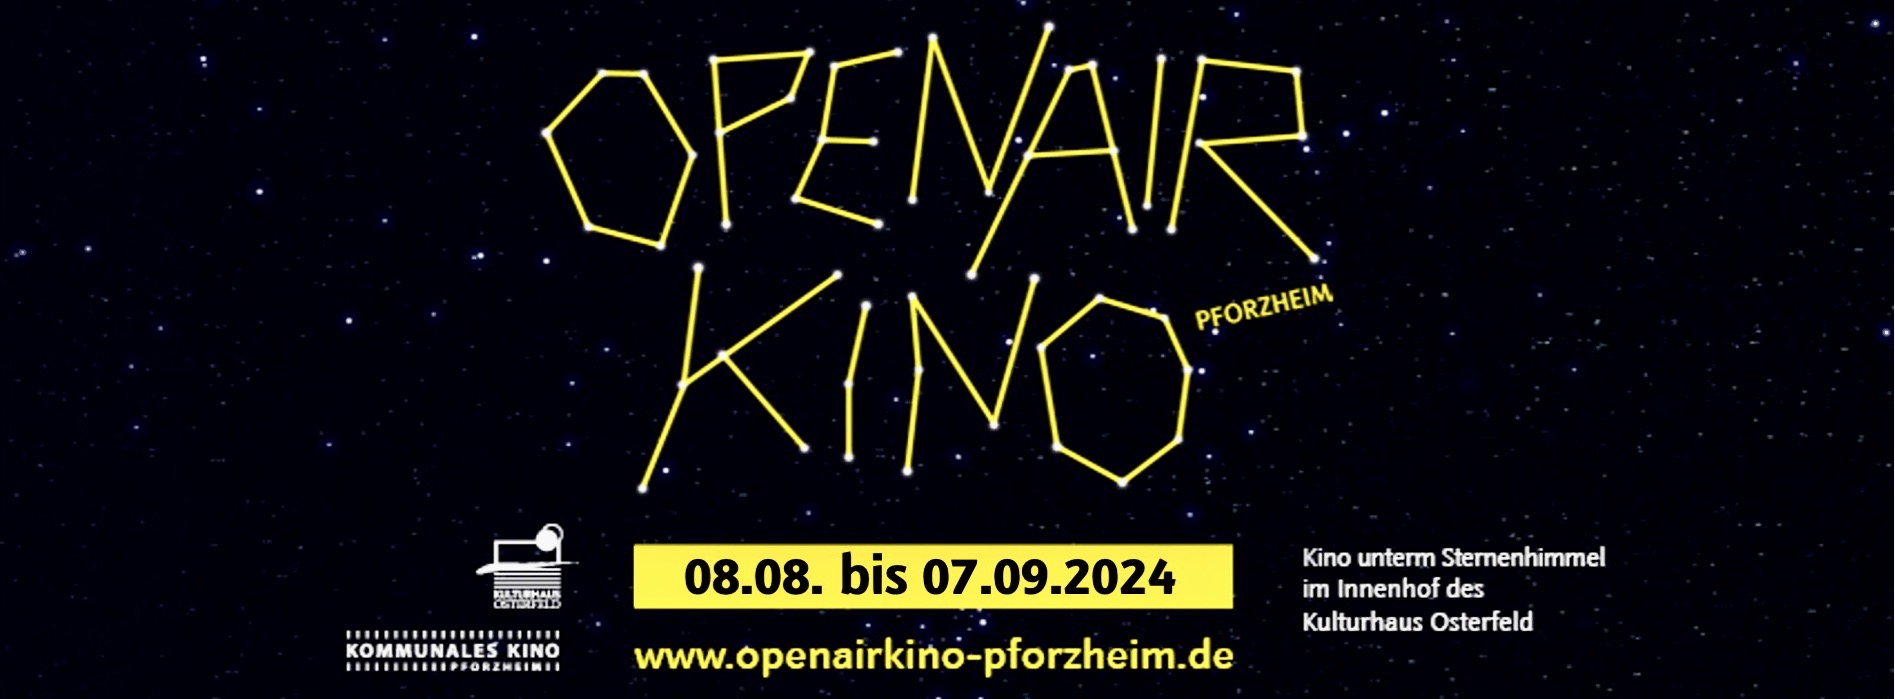 Openair Kino Pforzheim